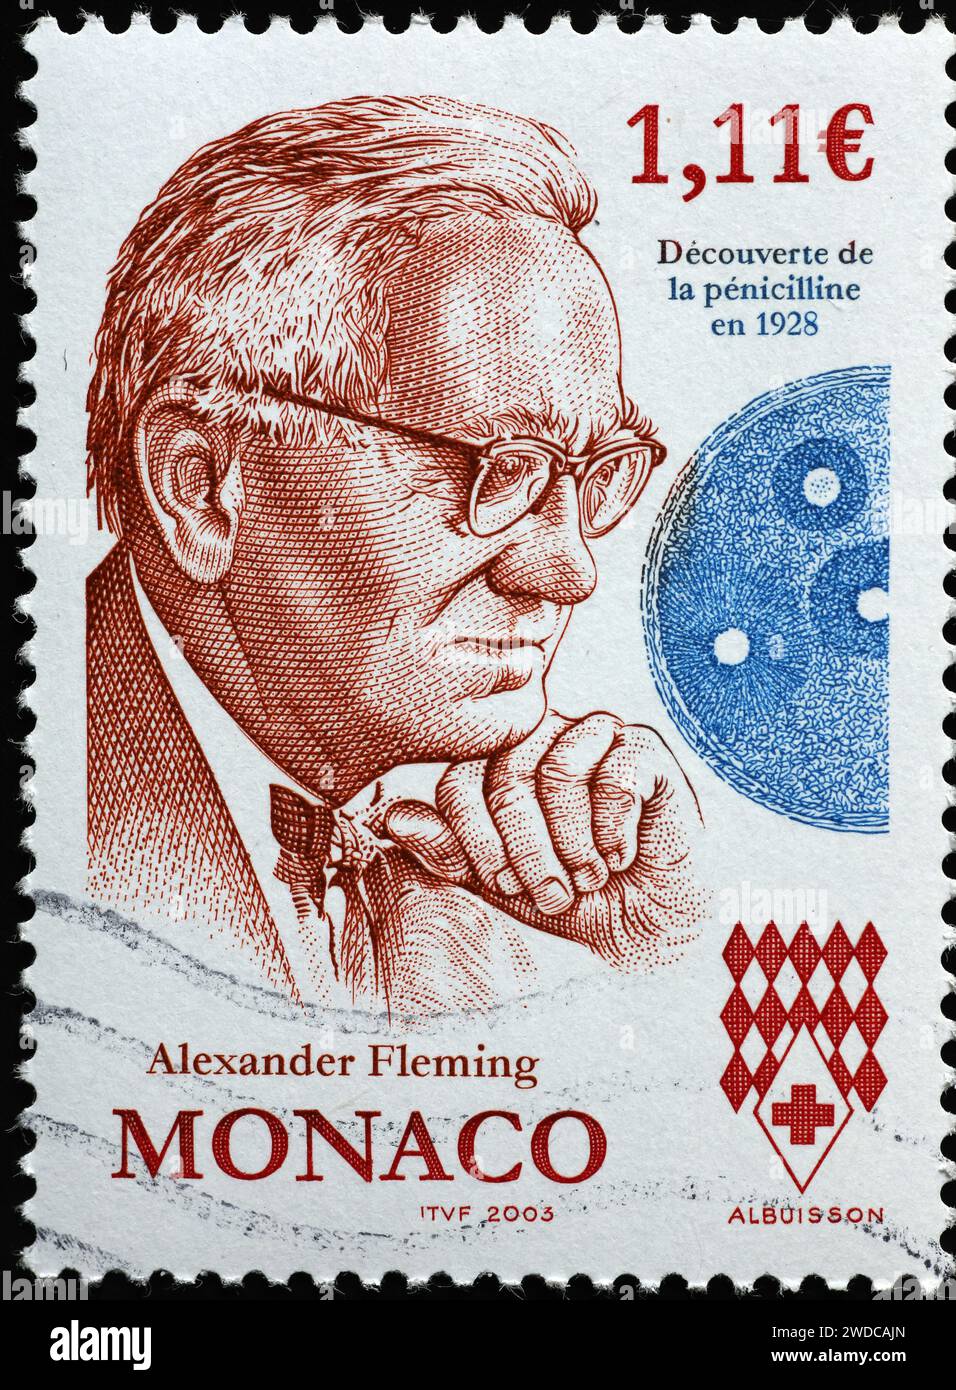 Alexander Fleming on postage stamp of Monaco Stock Photo